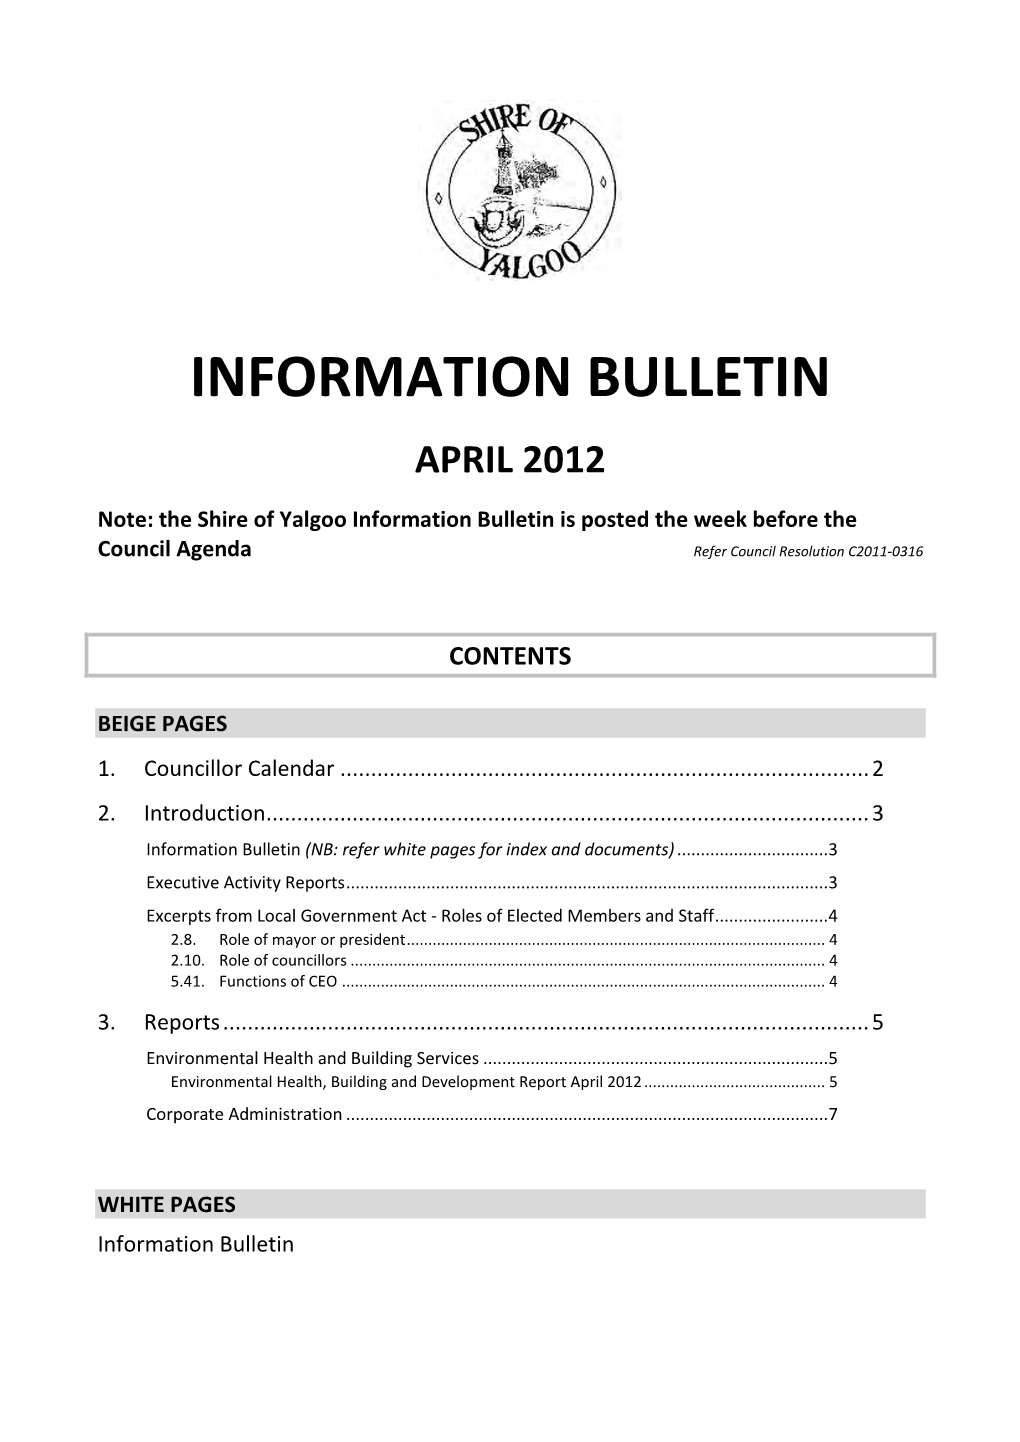 Information Bulletin April 2012